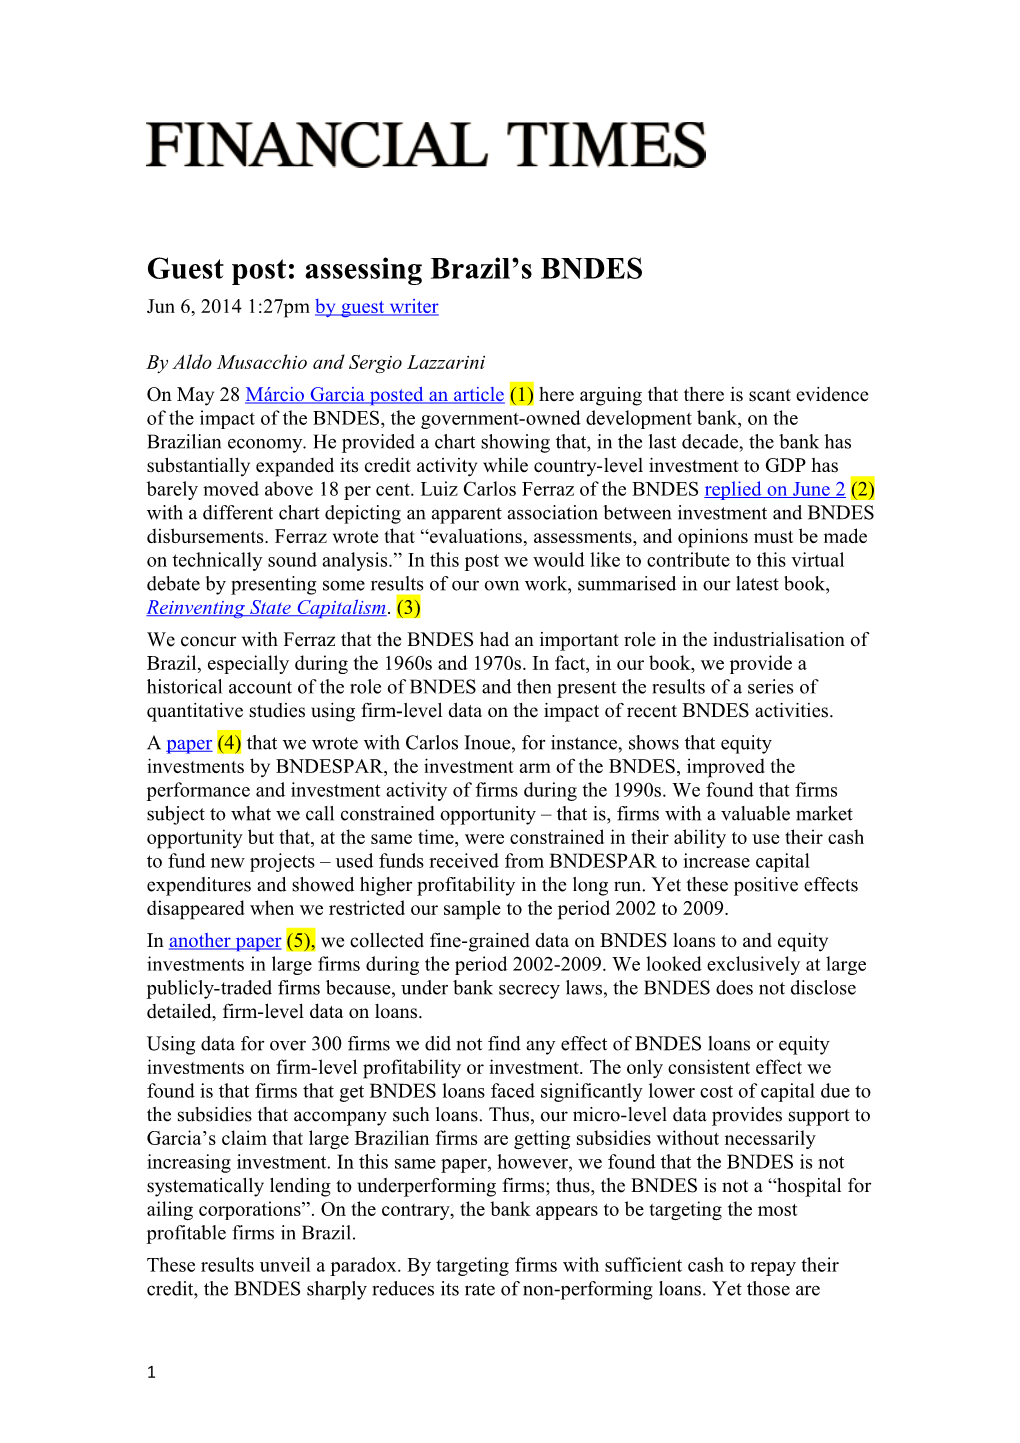 Guest Post: Assessing Brazil S BNDES